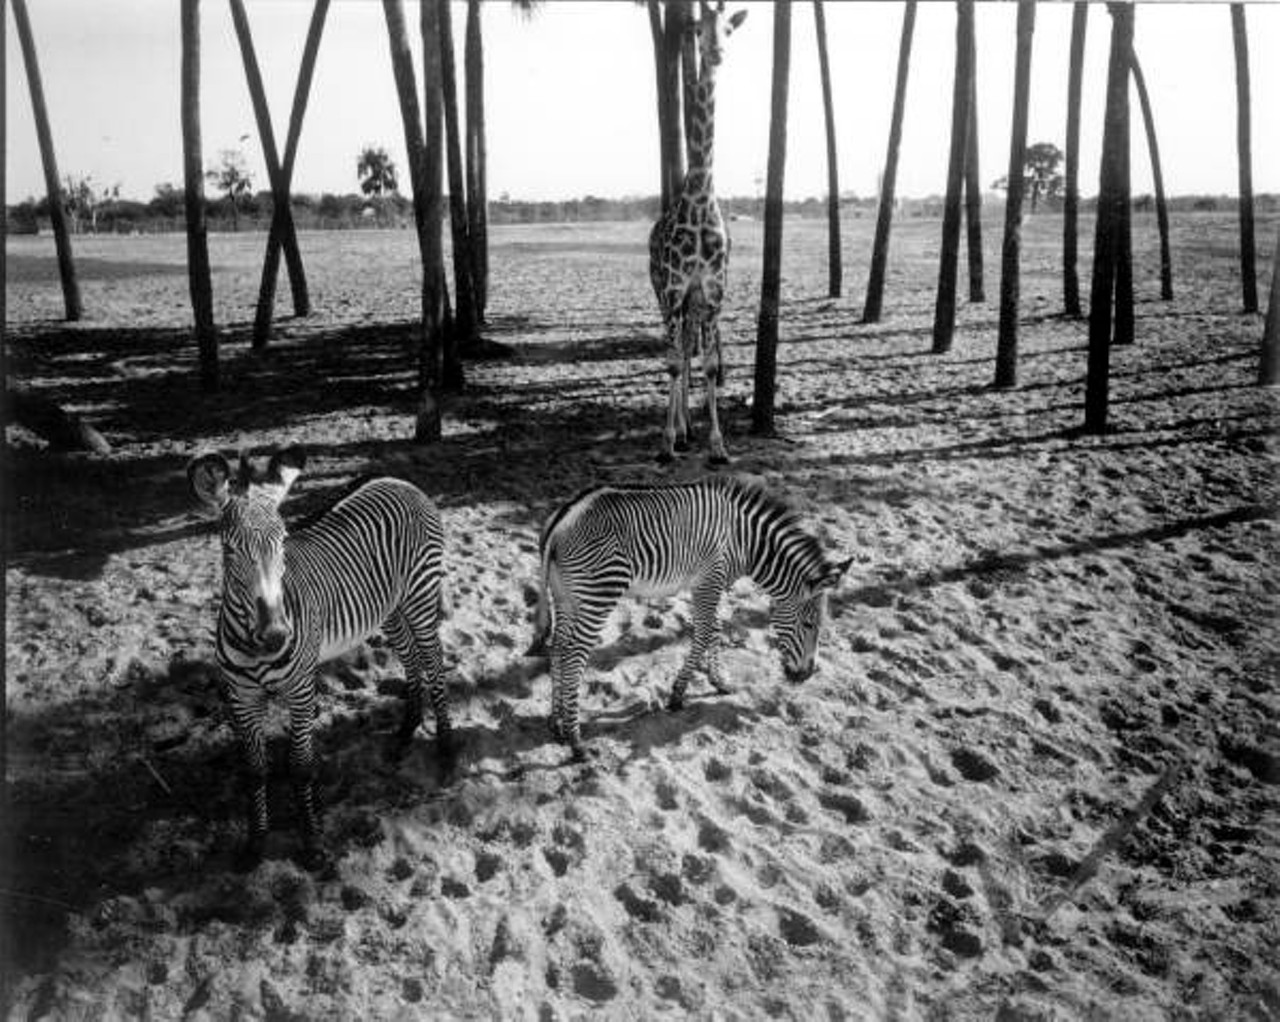 Zebras with giraffe at Busch Gardens. 1970.